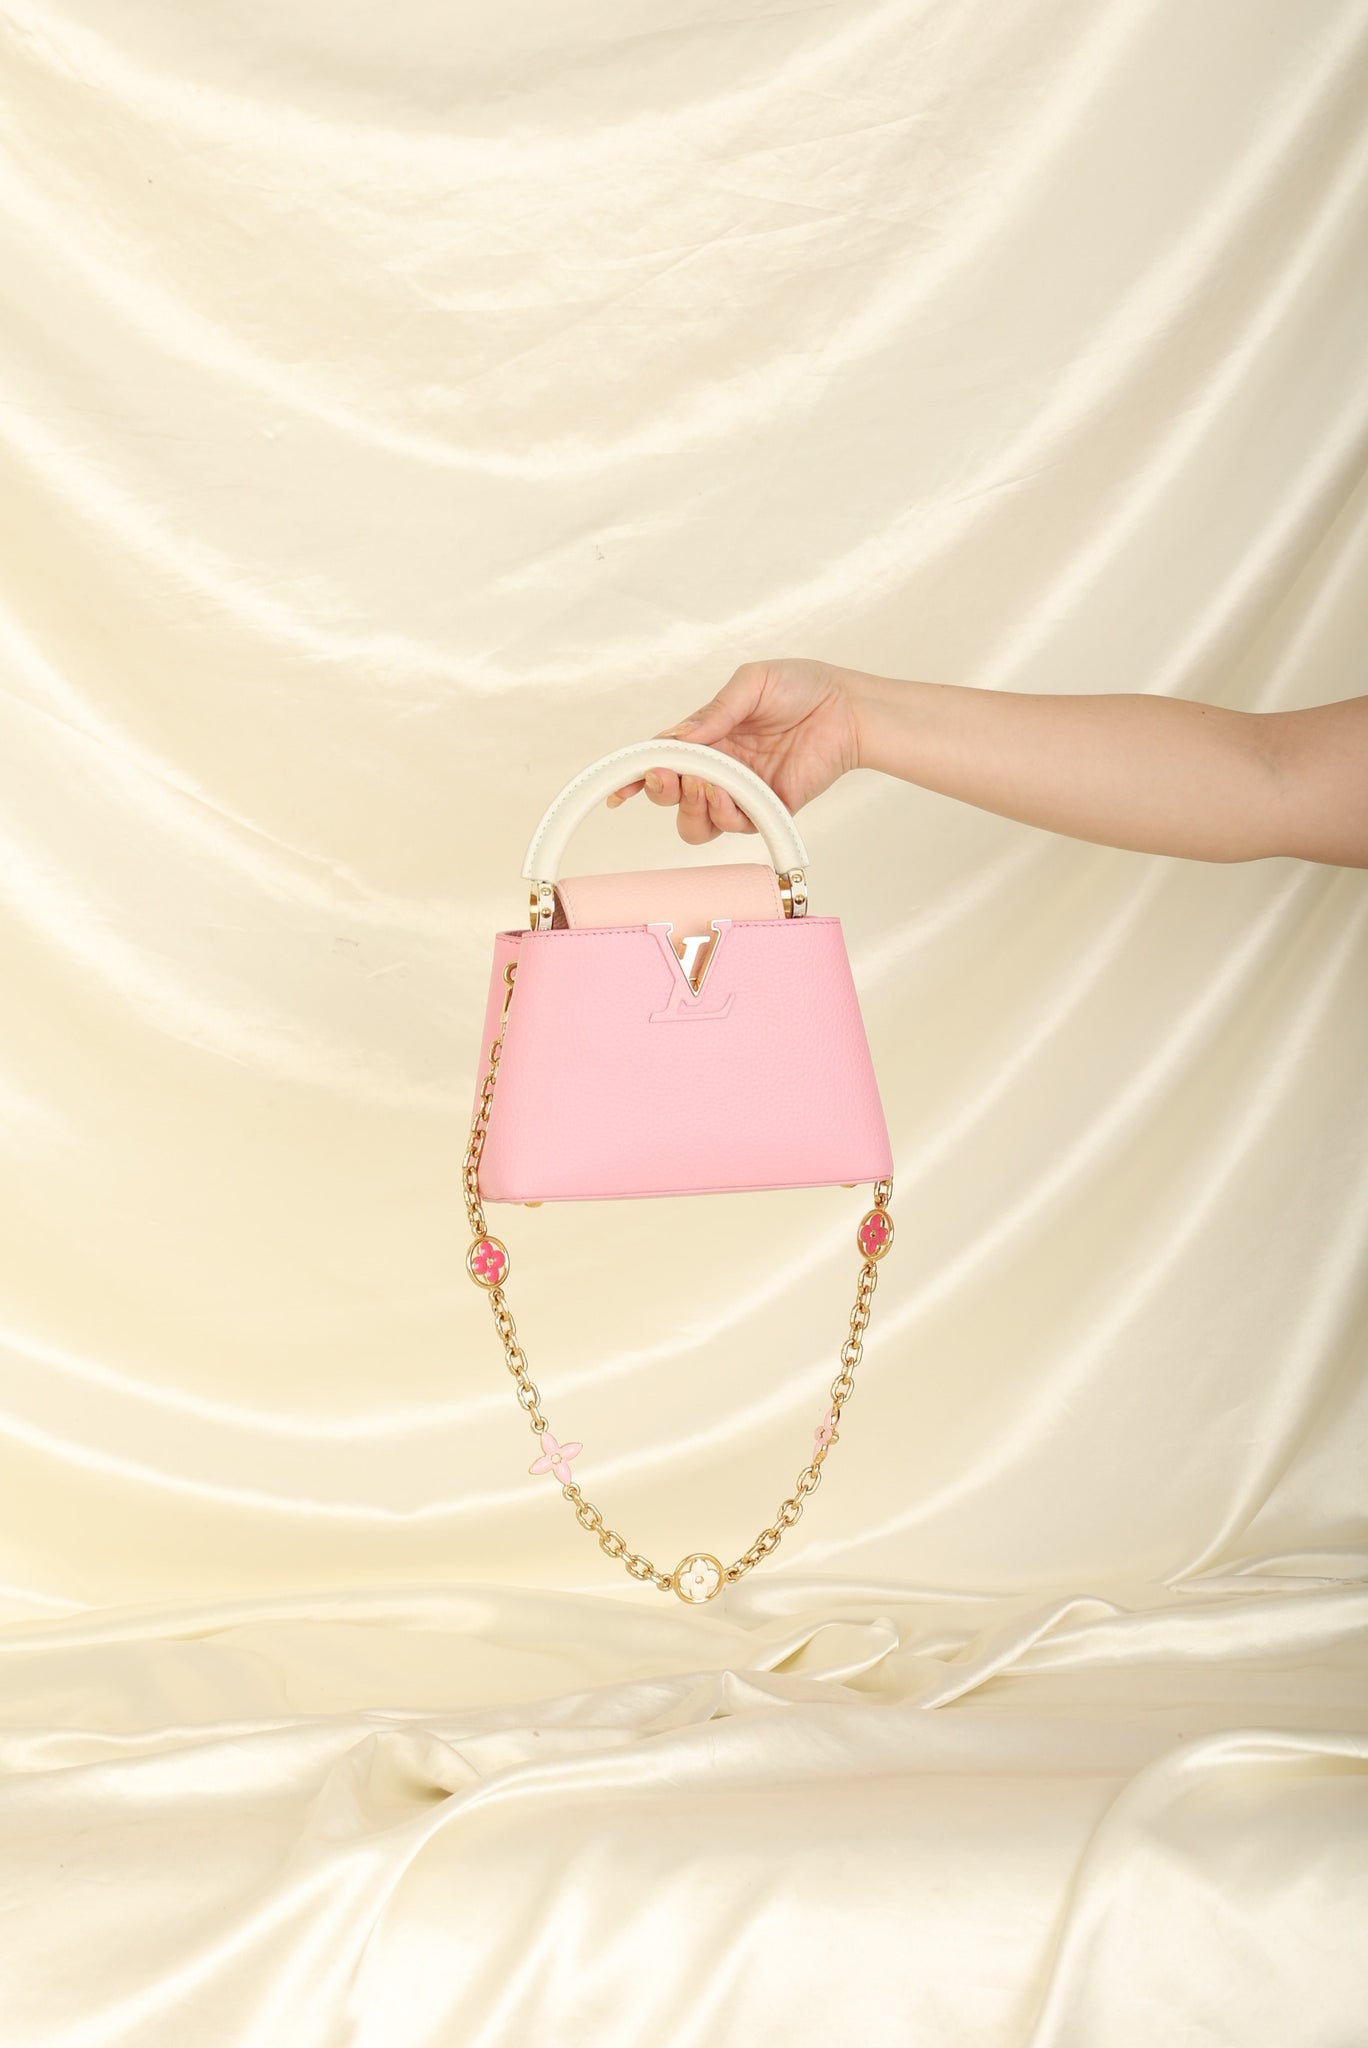 Limited Edition Louis Vuitton Capucines BB Bag